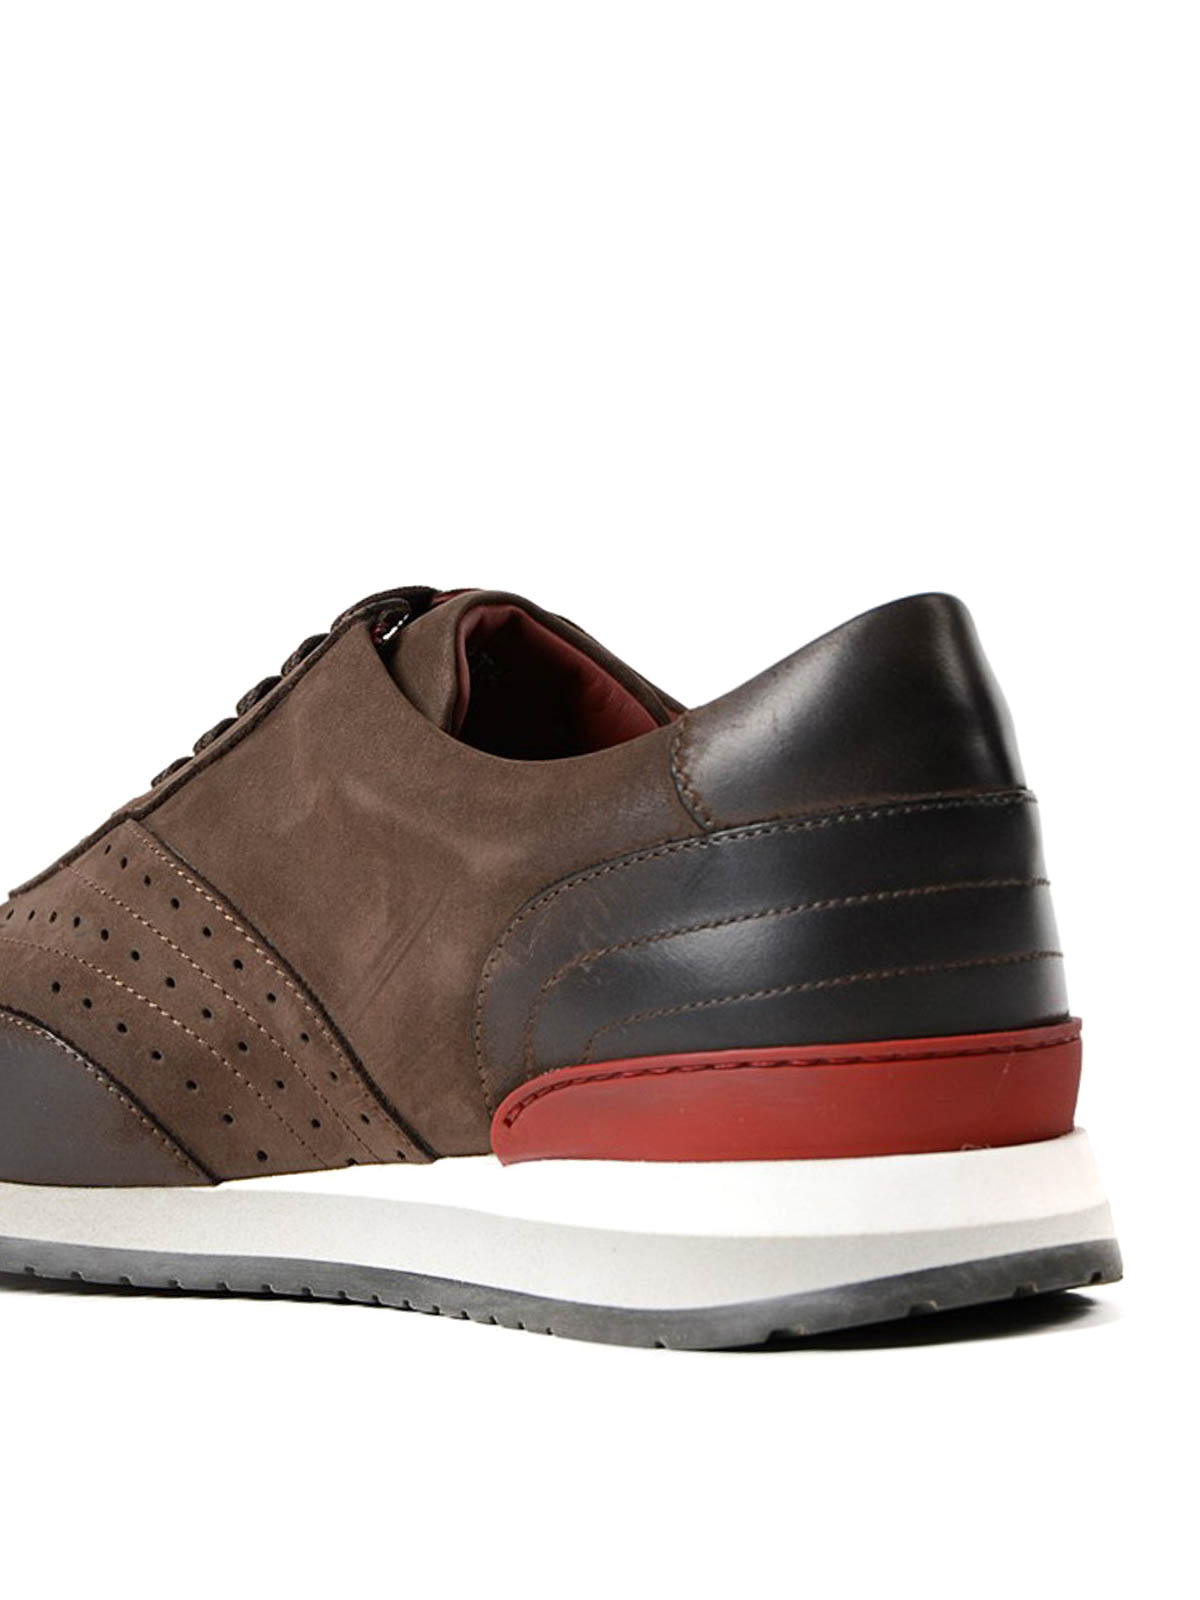 Shop Moreschi Perforated Leather Sneaker | Harrolds Australia